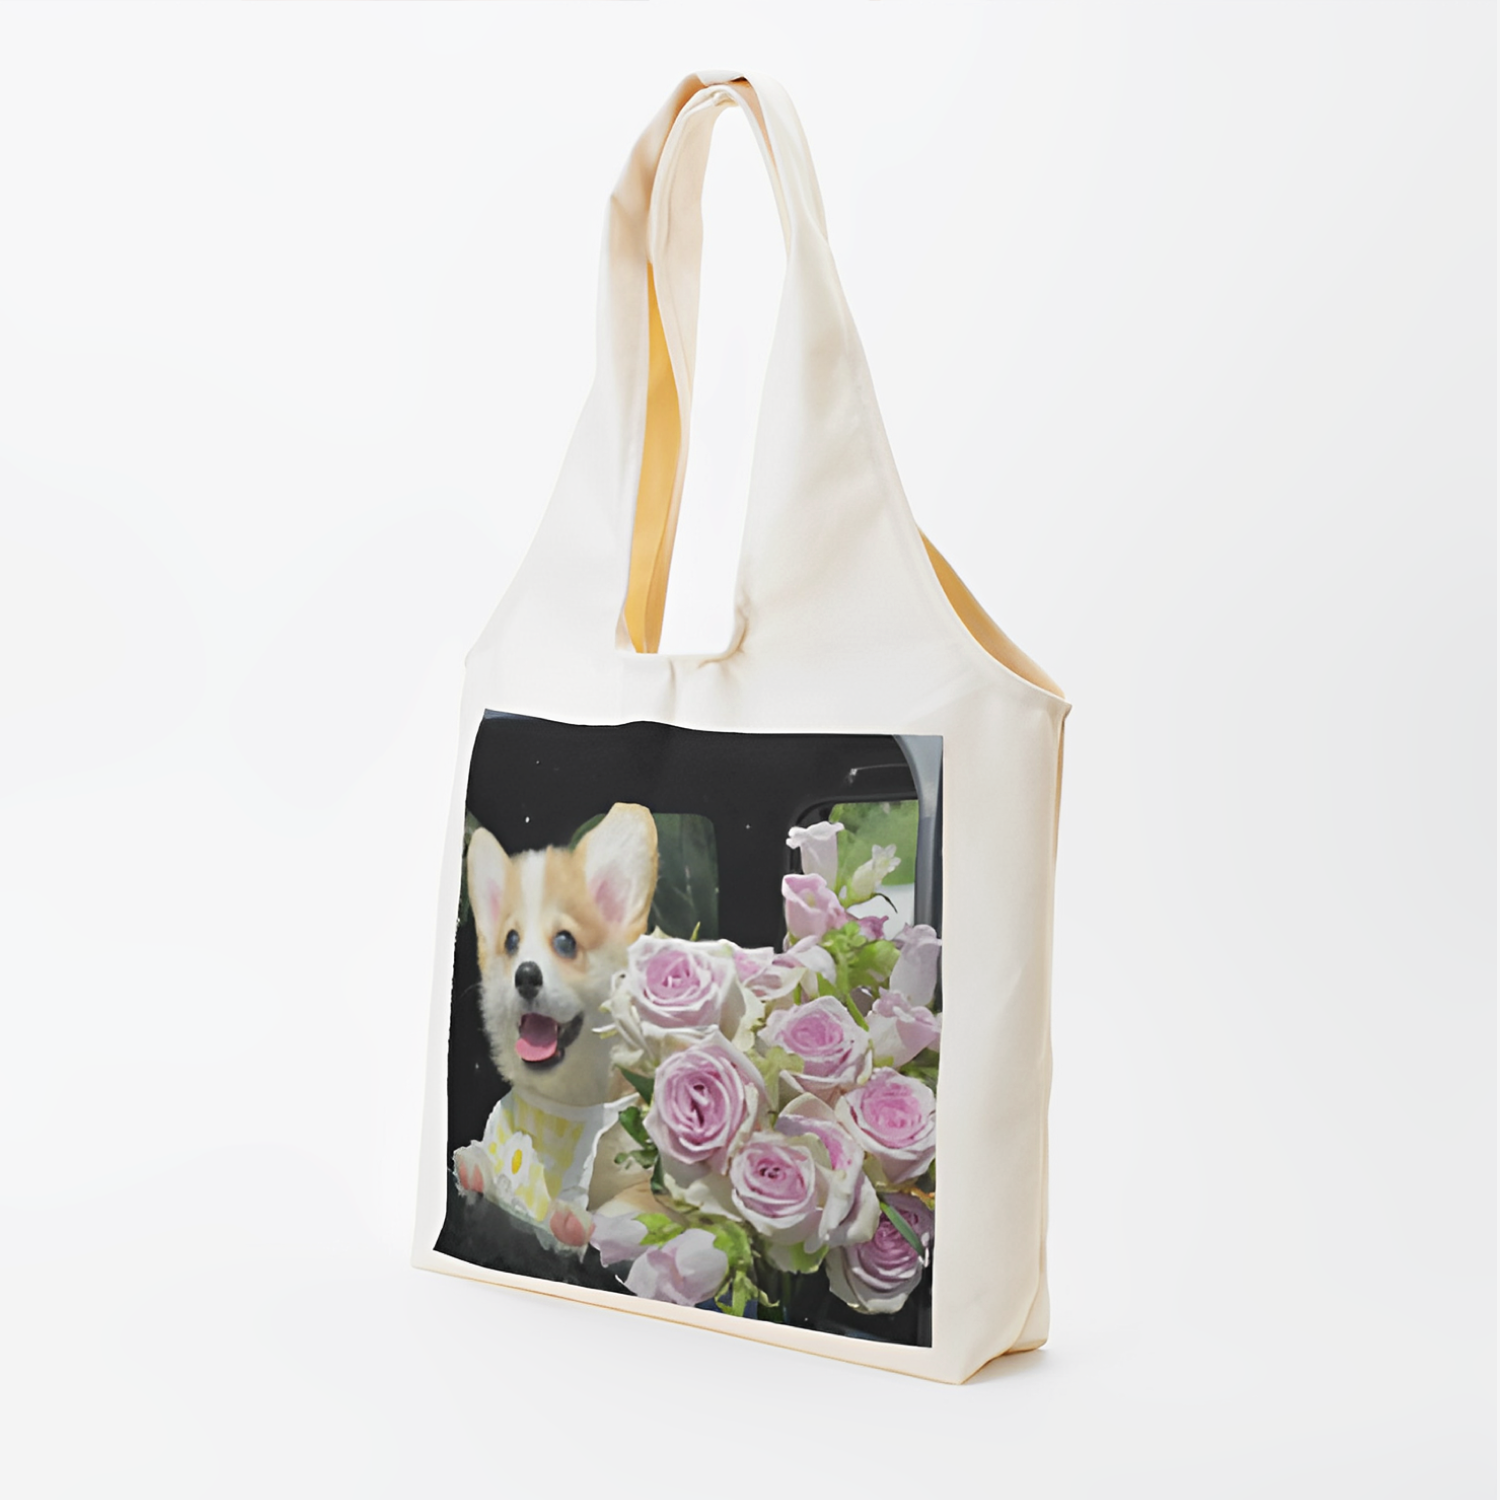 Custom Pet Canvas Bag